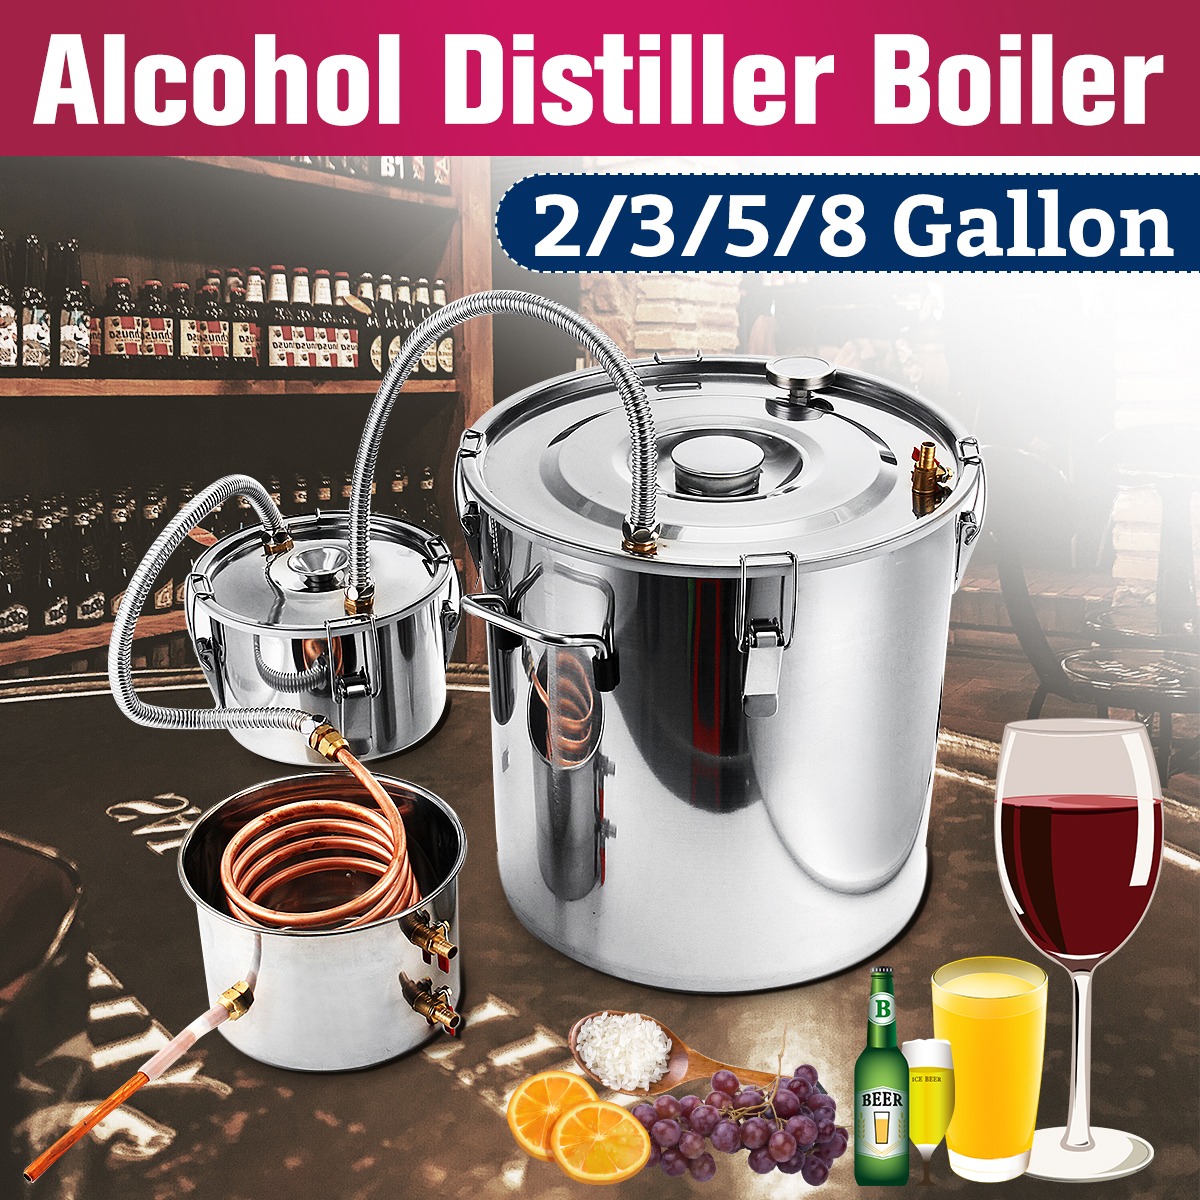 2358-Gallons--Moonshine-Still-Spirits-Kit-Water-Alcohol-Distiller-Copper-Tube-Boiler-Home-Brewing-Ki-1484258